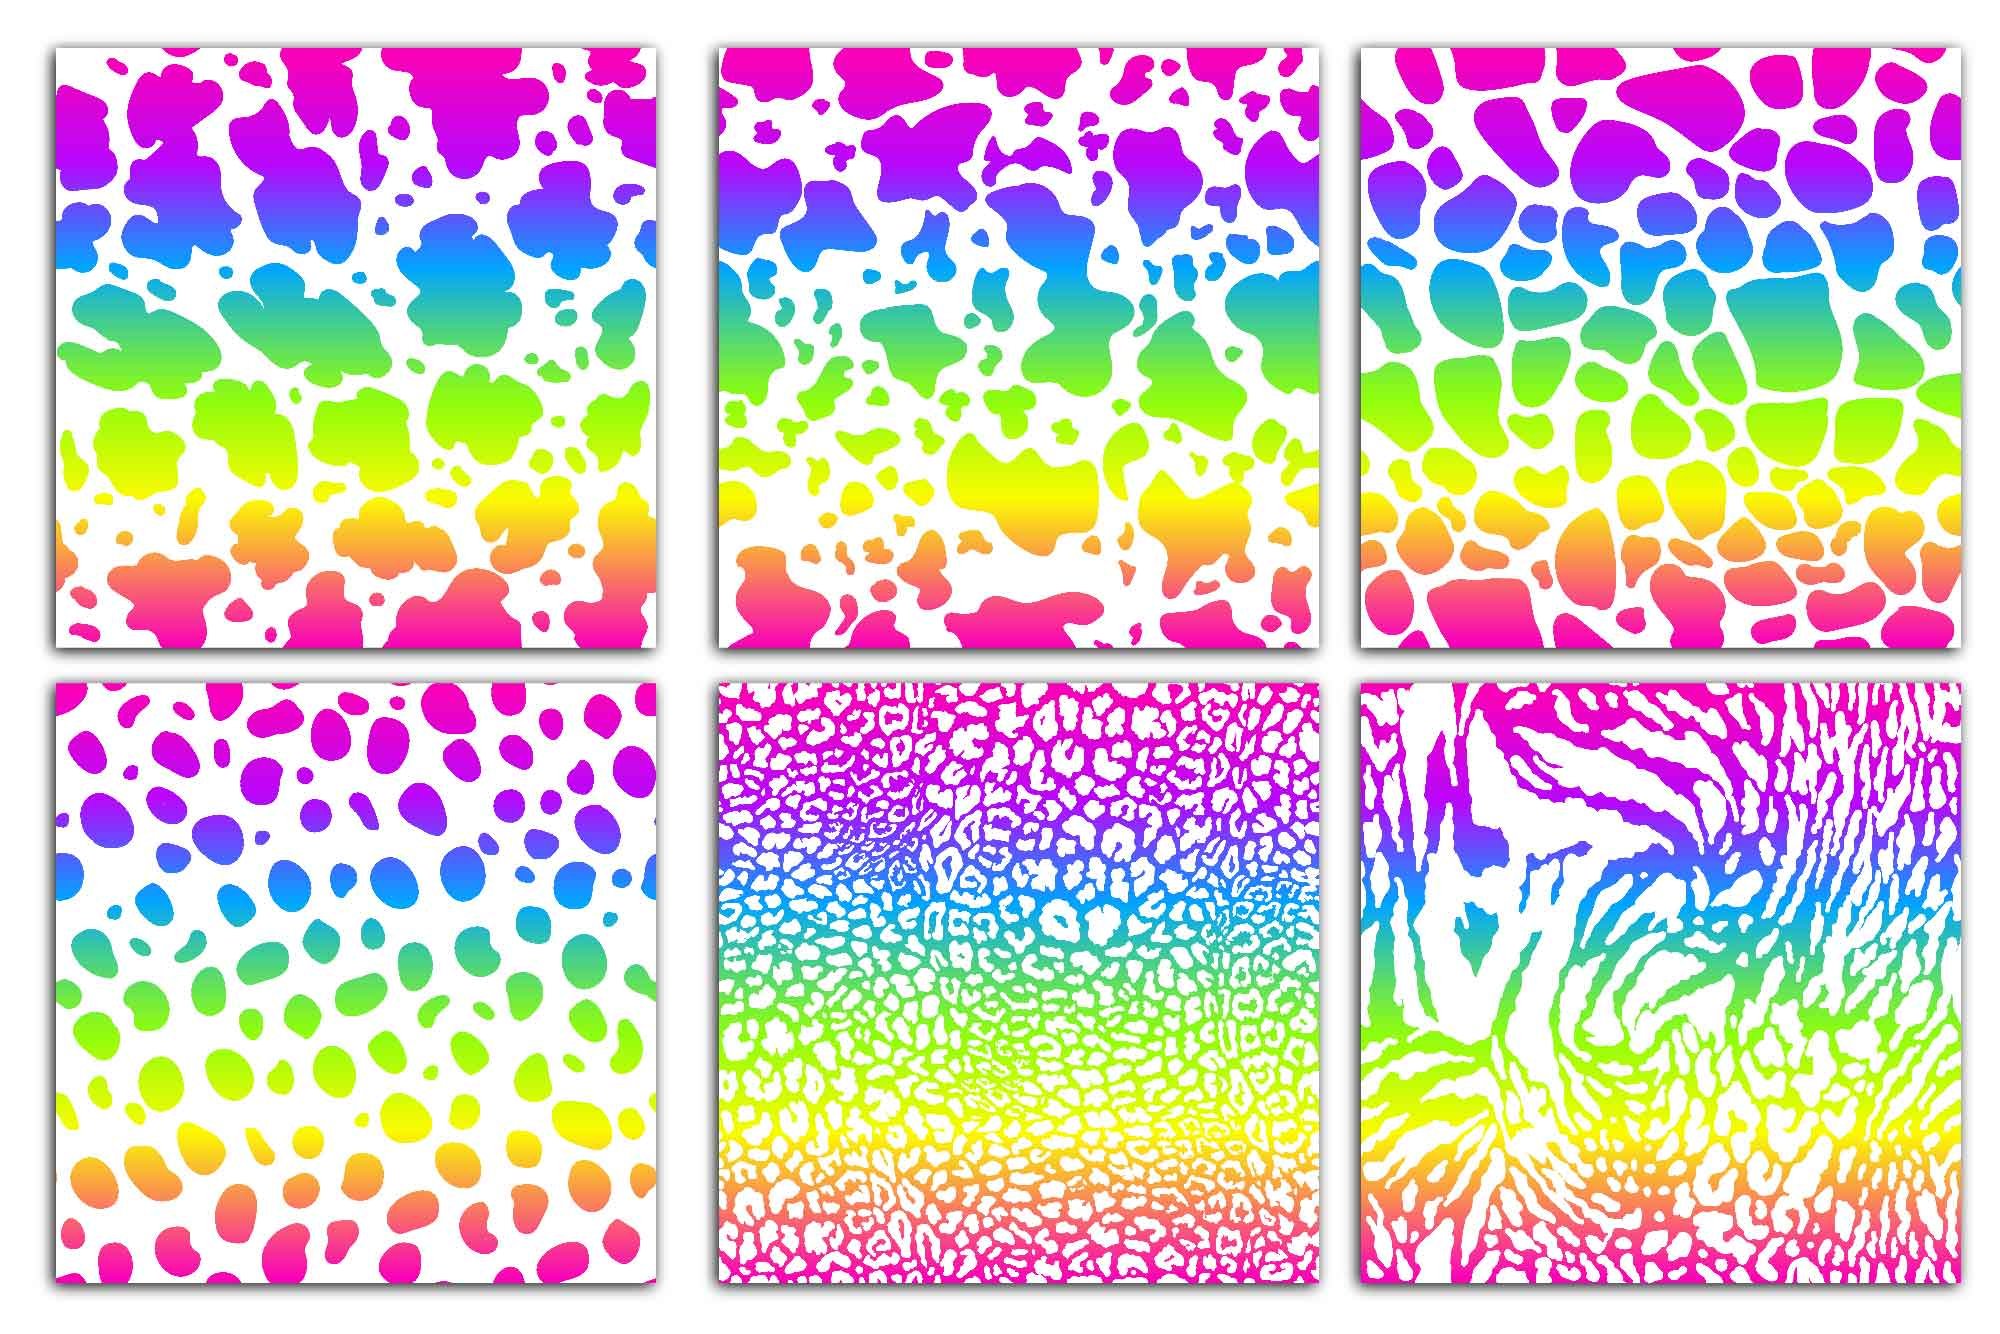 Seamless rainbow Leopard print pattern